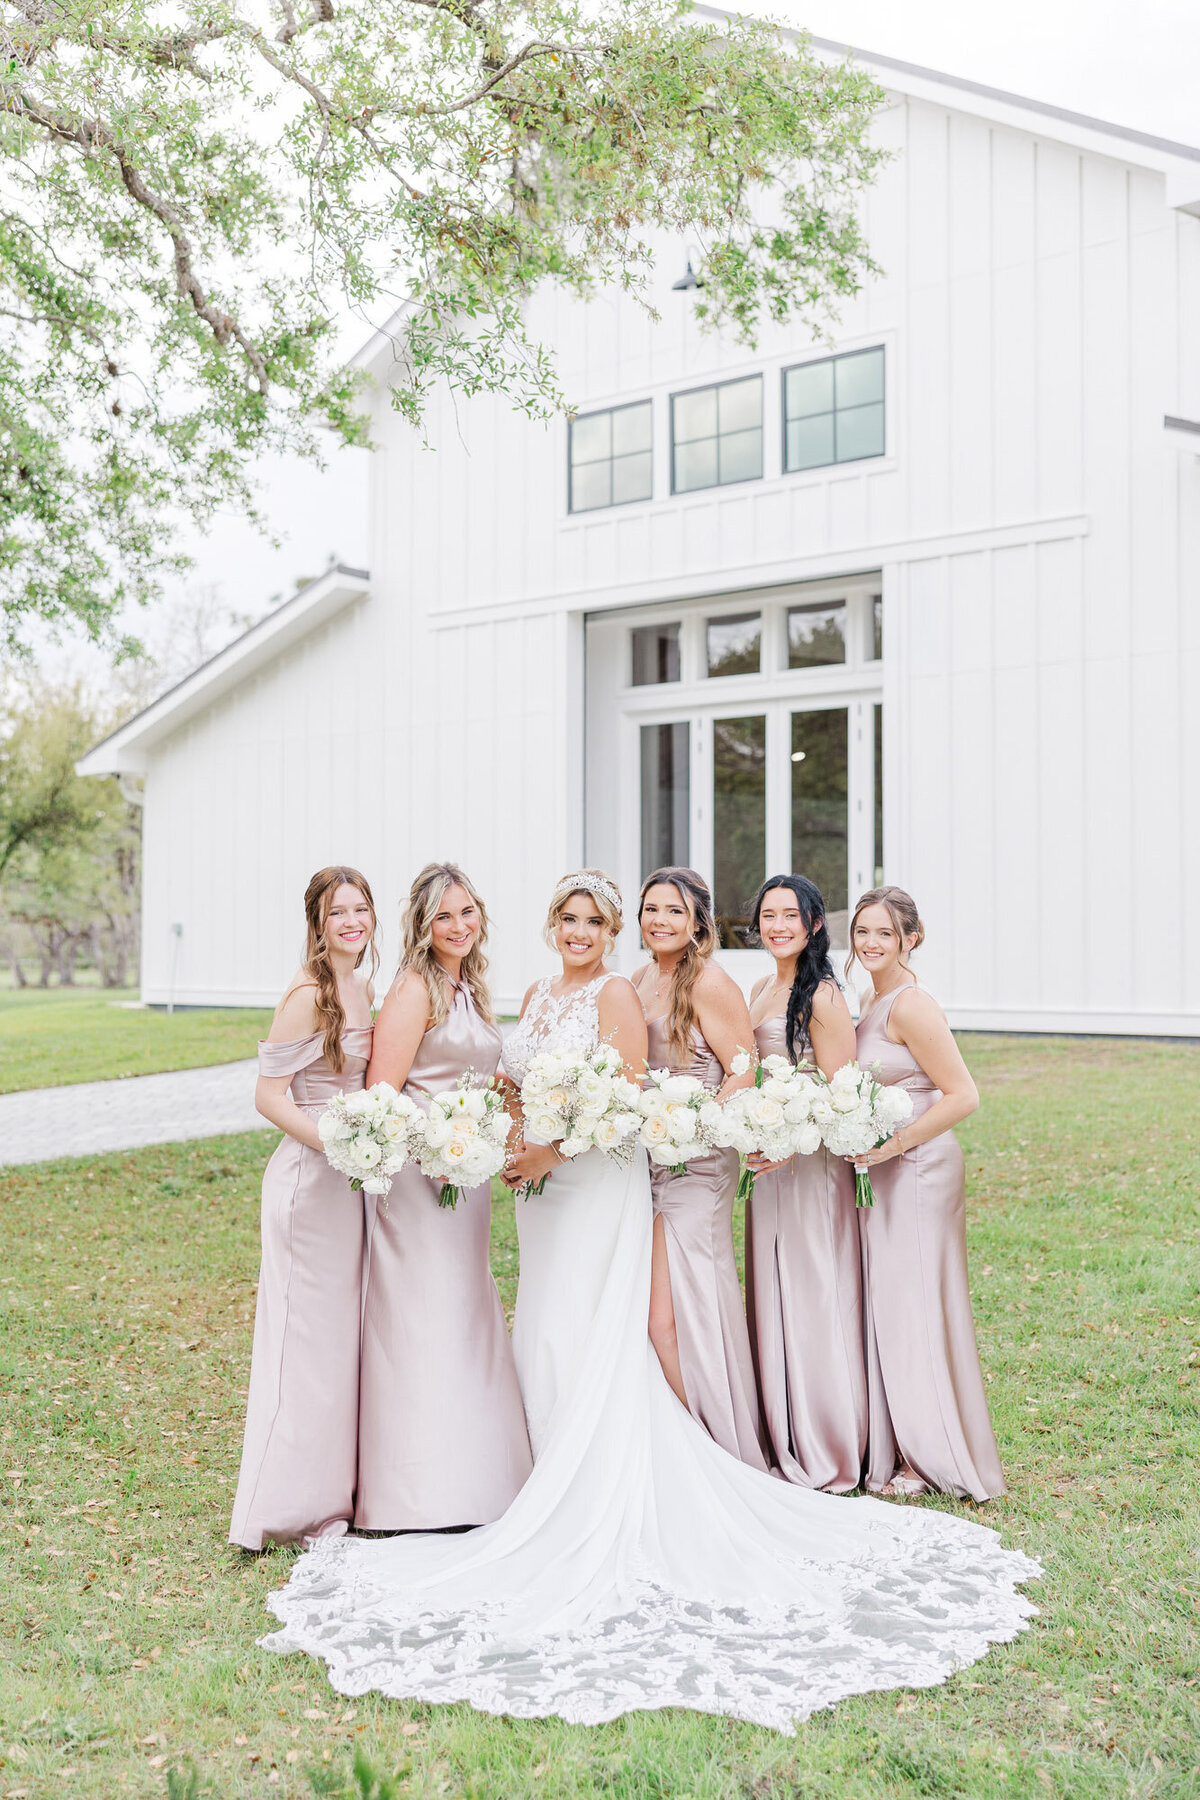 Chloe & Emerson - South Florida Wedding - Deanna Grace Photography -12